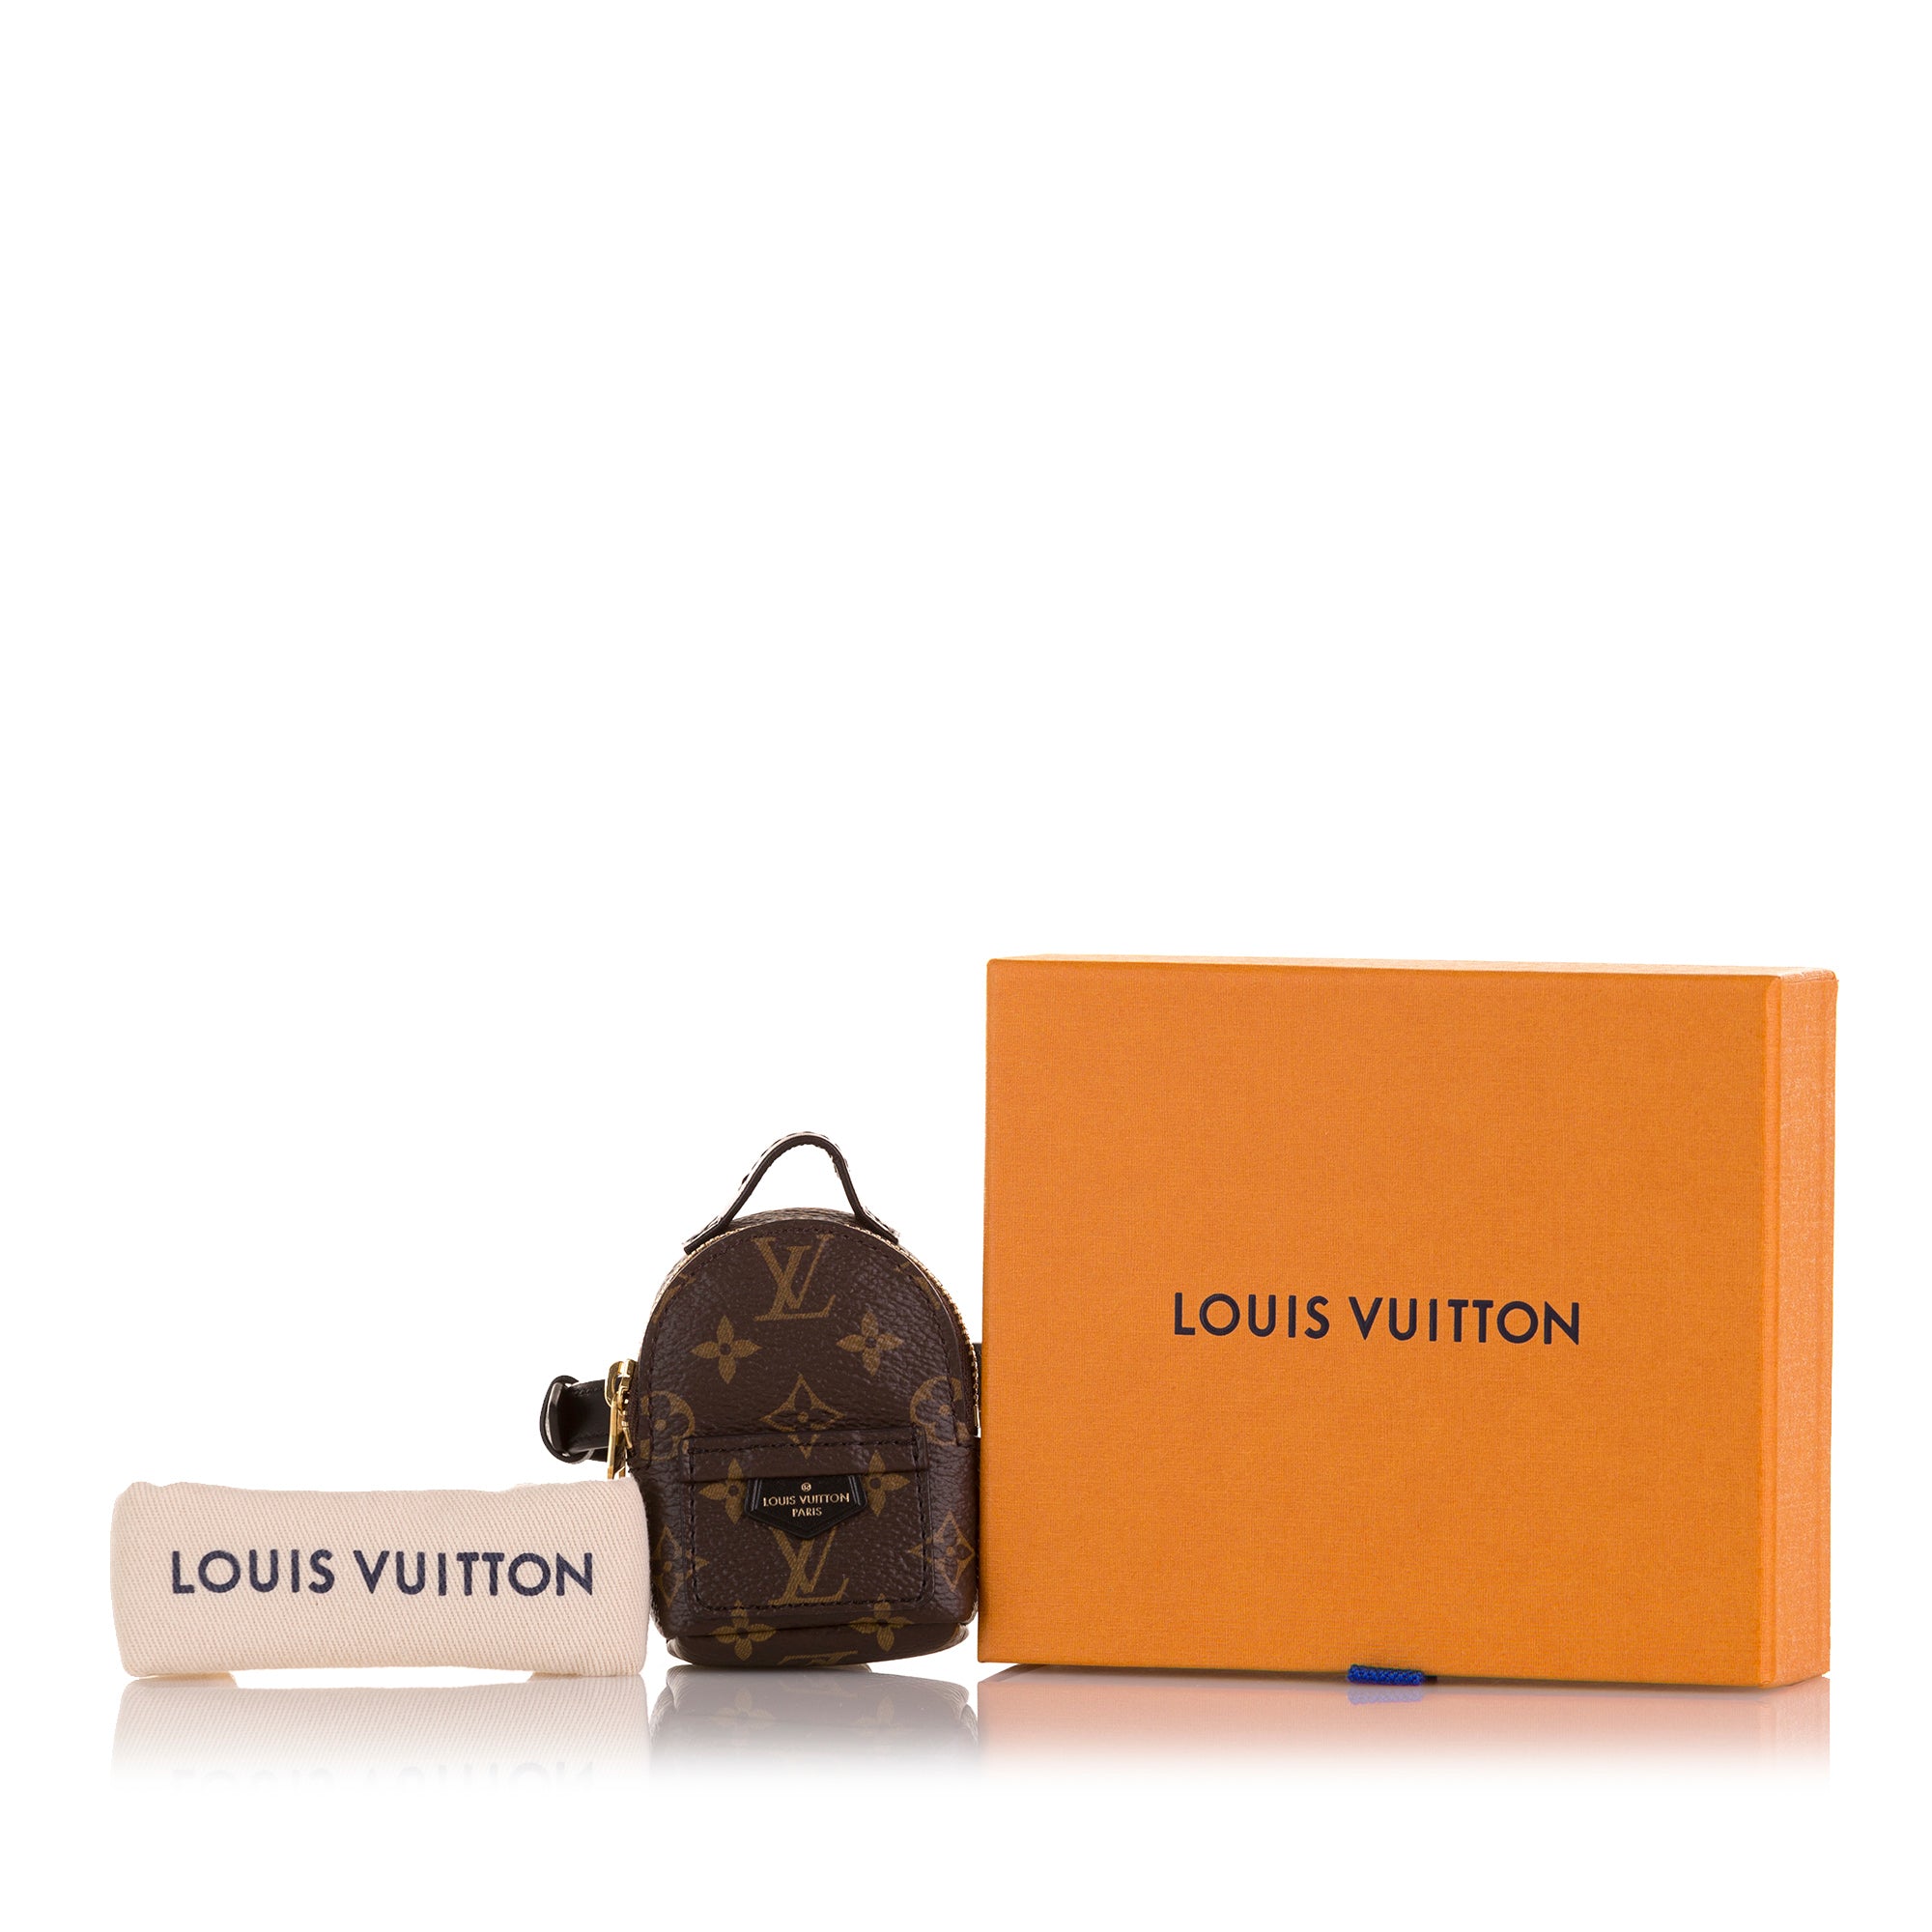 Louis Vuitton Cruise 2020 Collection Monogram Party Palm Springs Brace